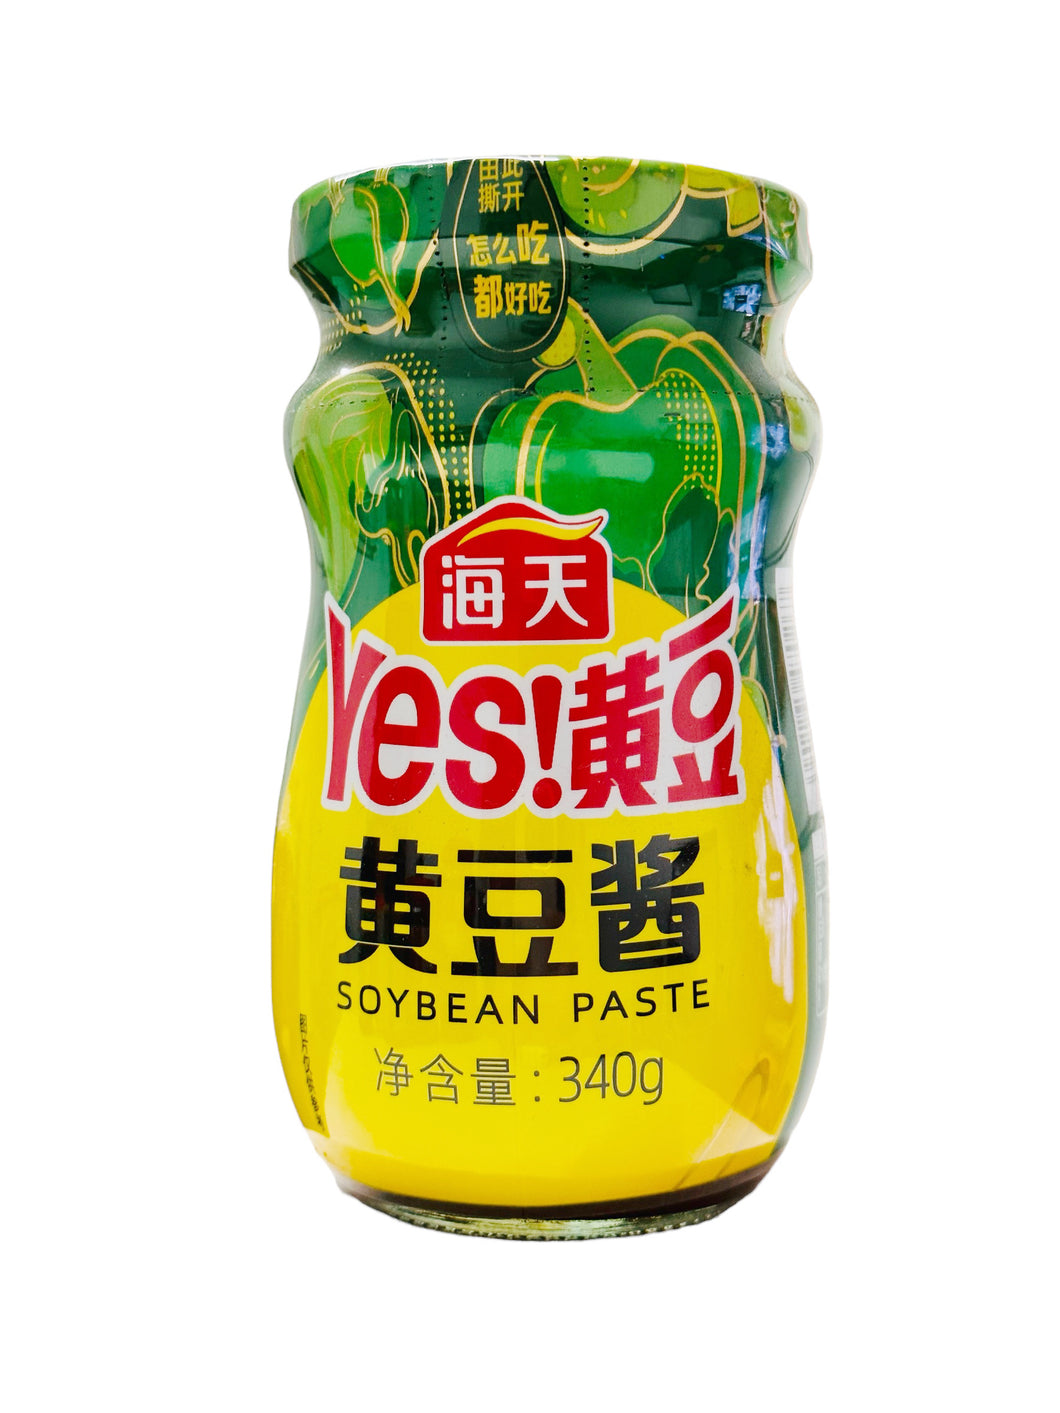 Haday Soybean Paste 340g 中海天黄豆酱